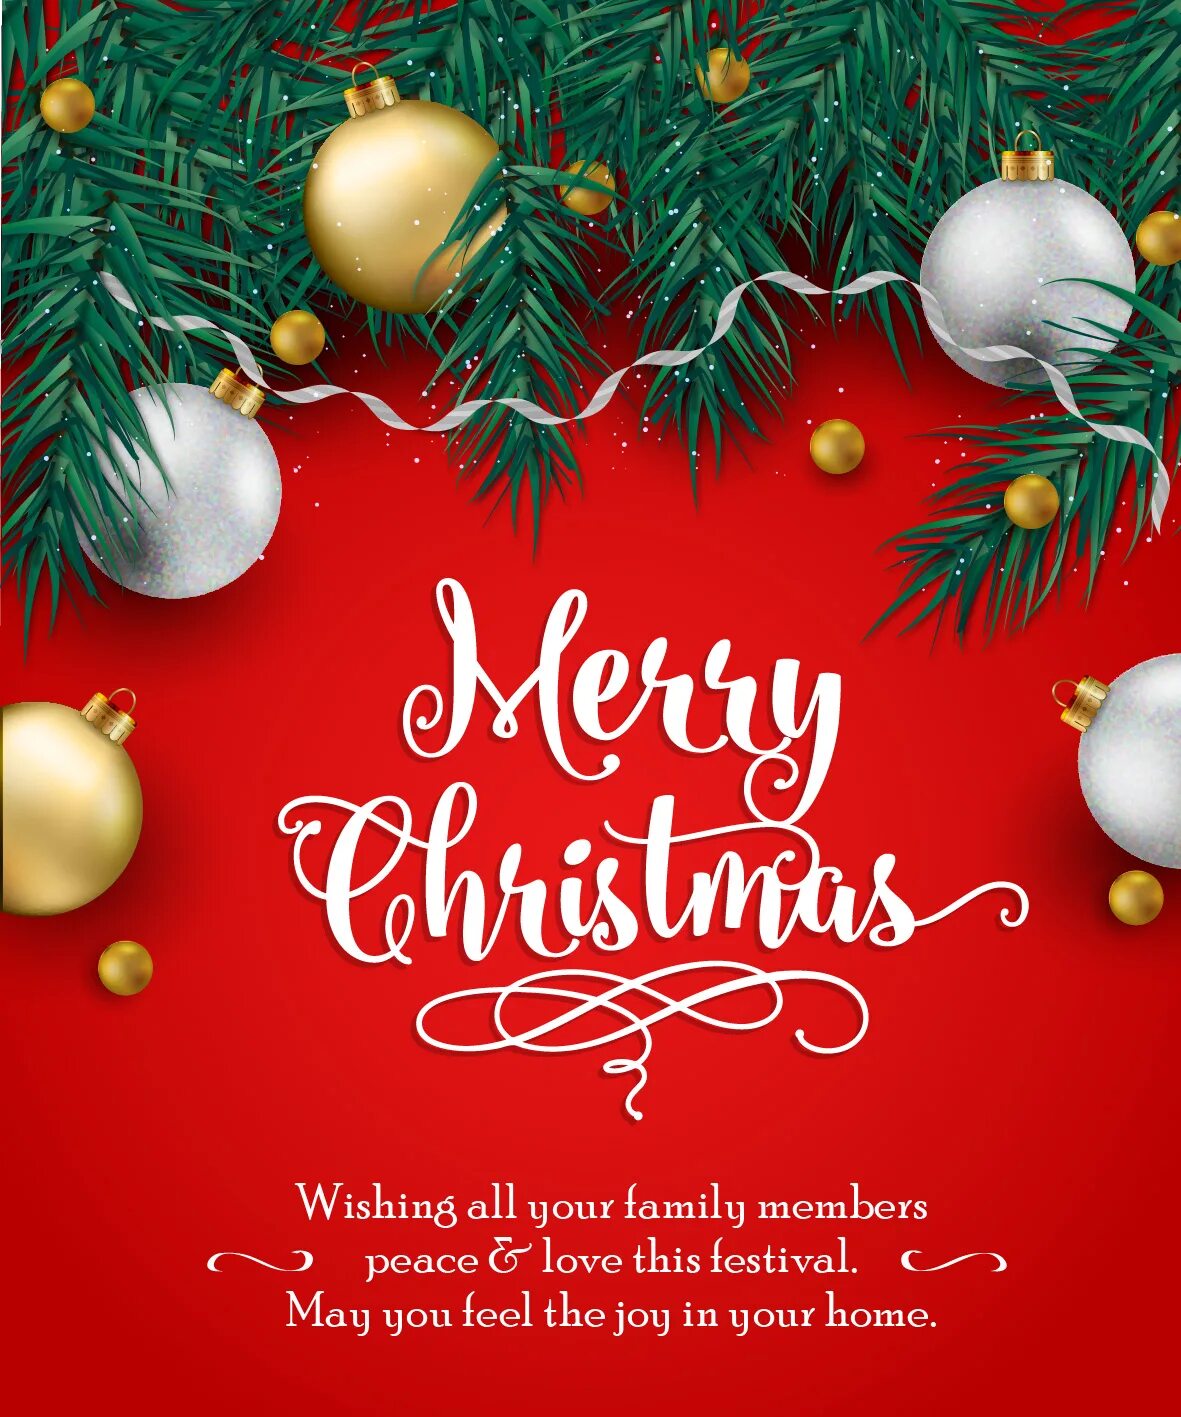 Merry Christmas Greeting Cards. Christmas Greetings. Christmas Greeting Card. Christmas e-Cards. Christmas greeting